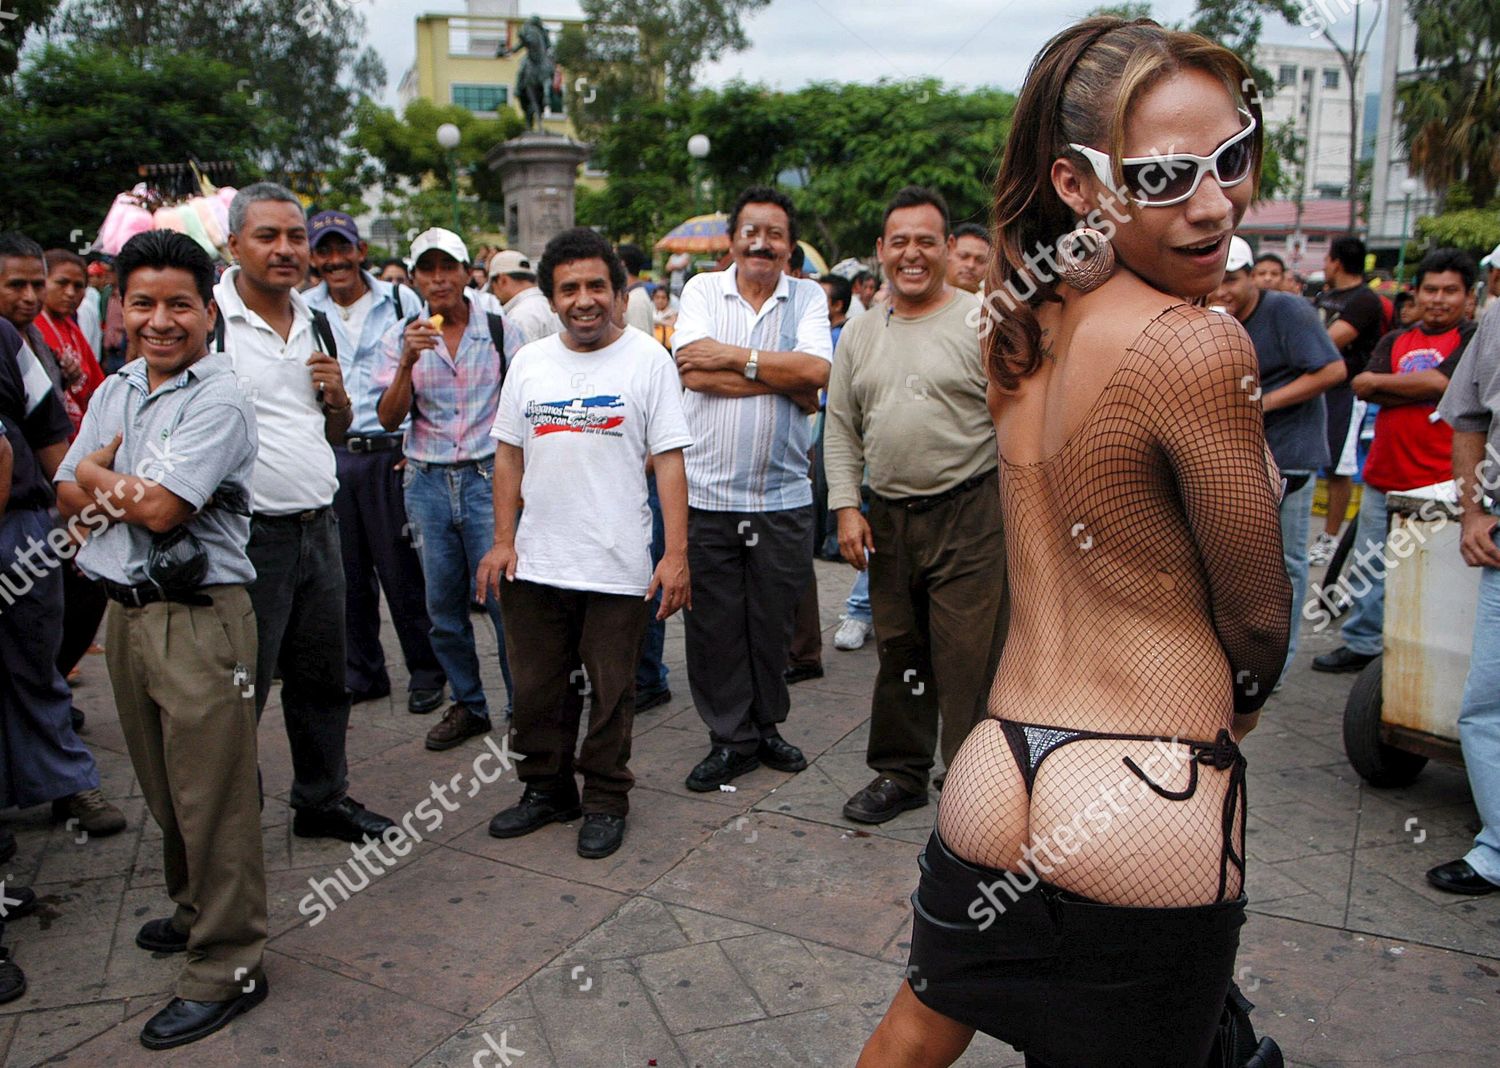 Salvadorean Crossdresser Poses Onlookers During Gay Pride